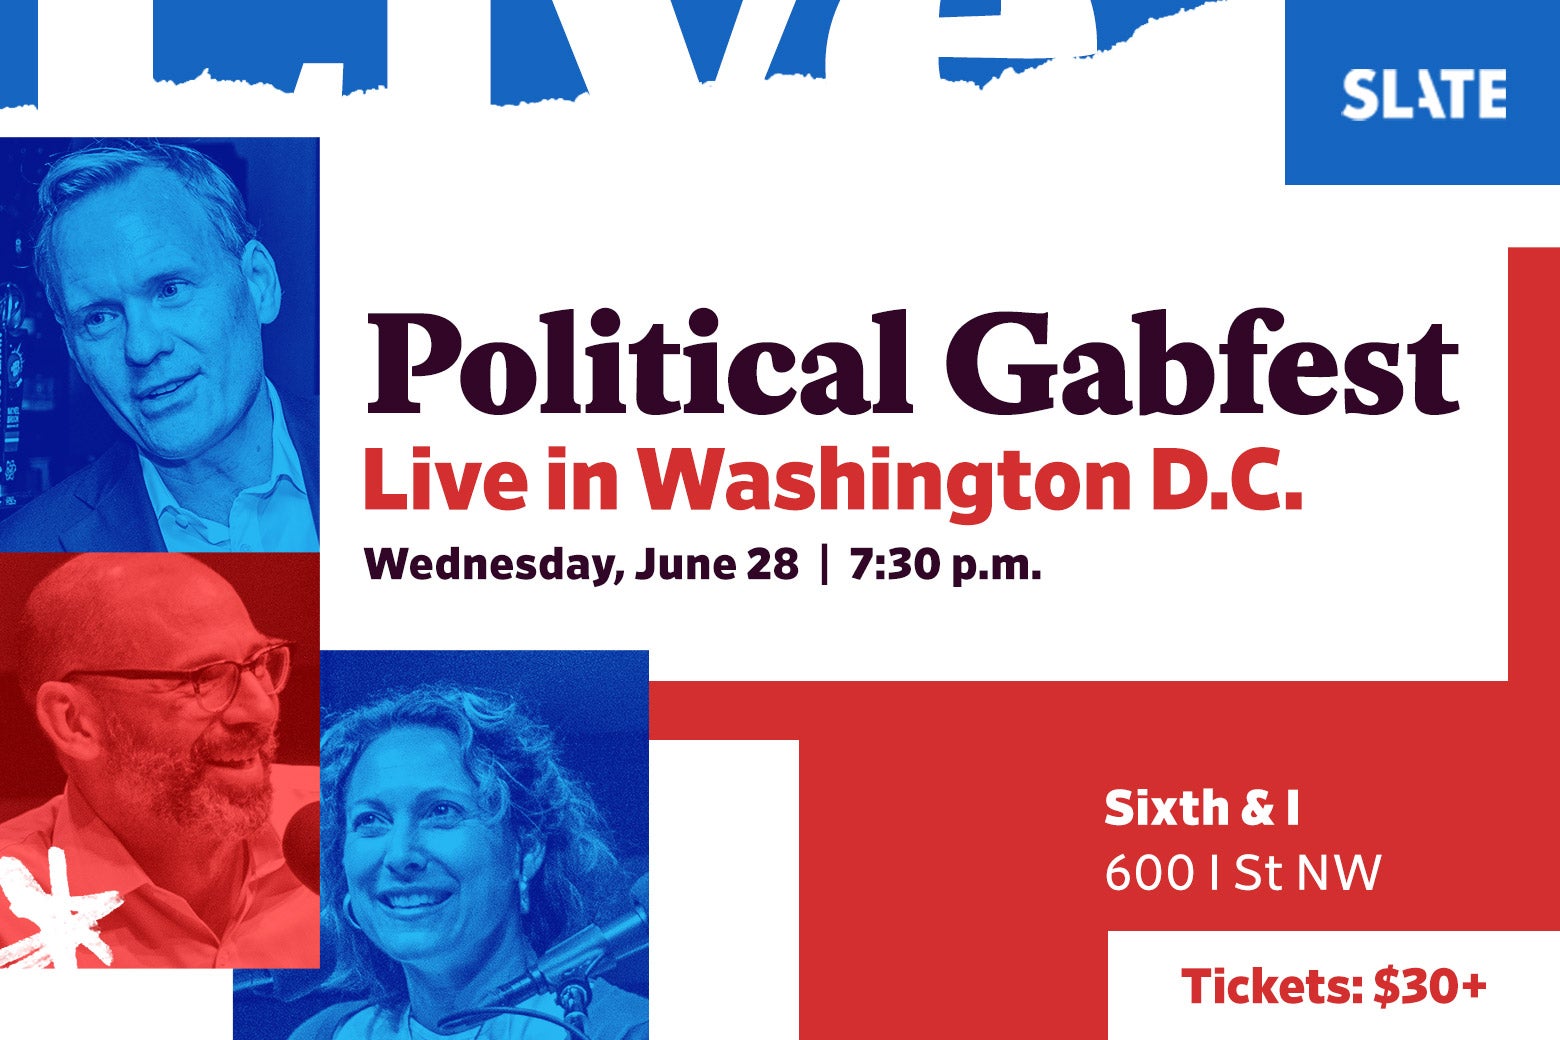 political gabfest logo with event descriptive text.
